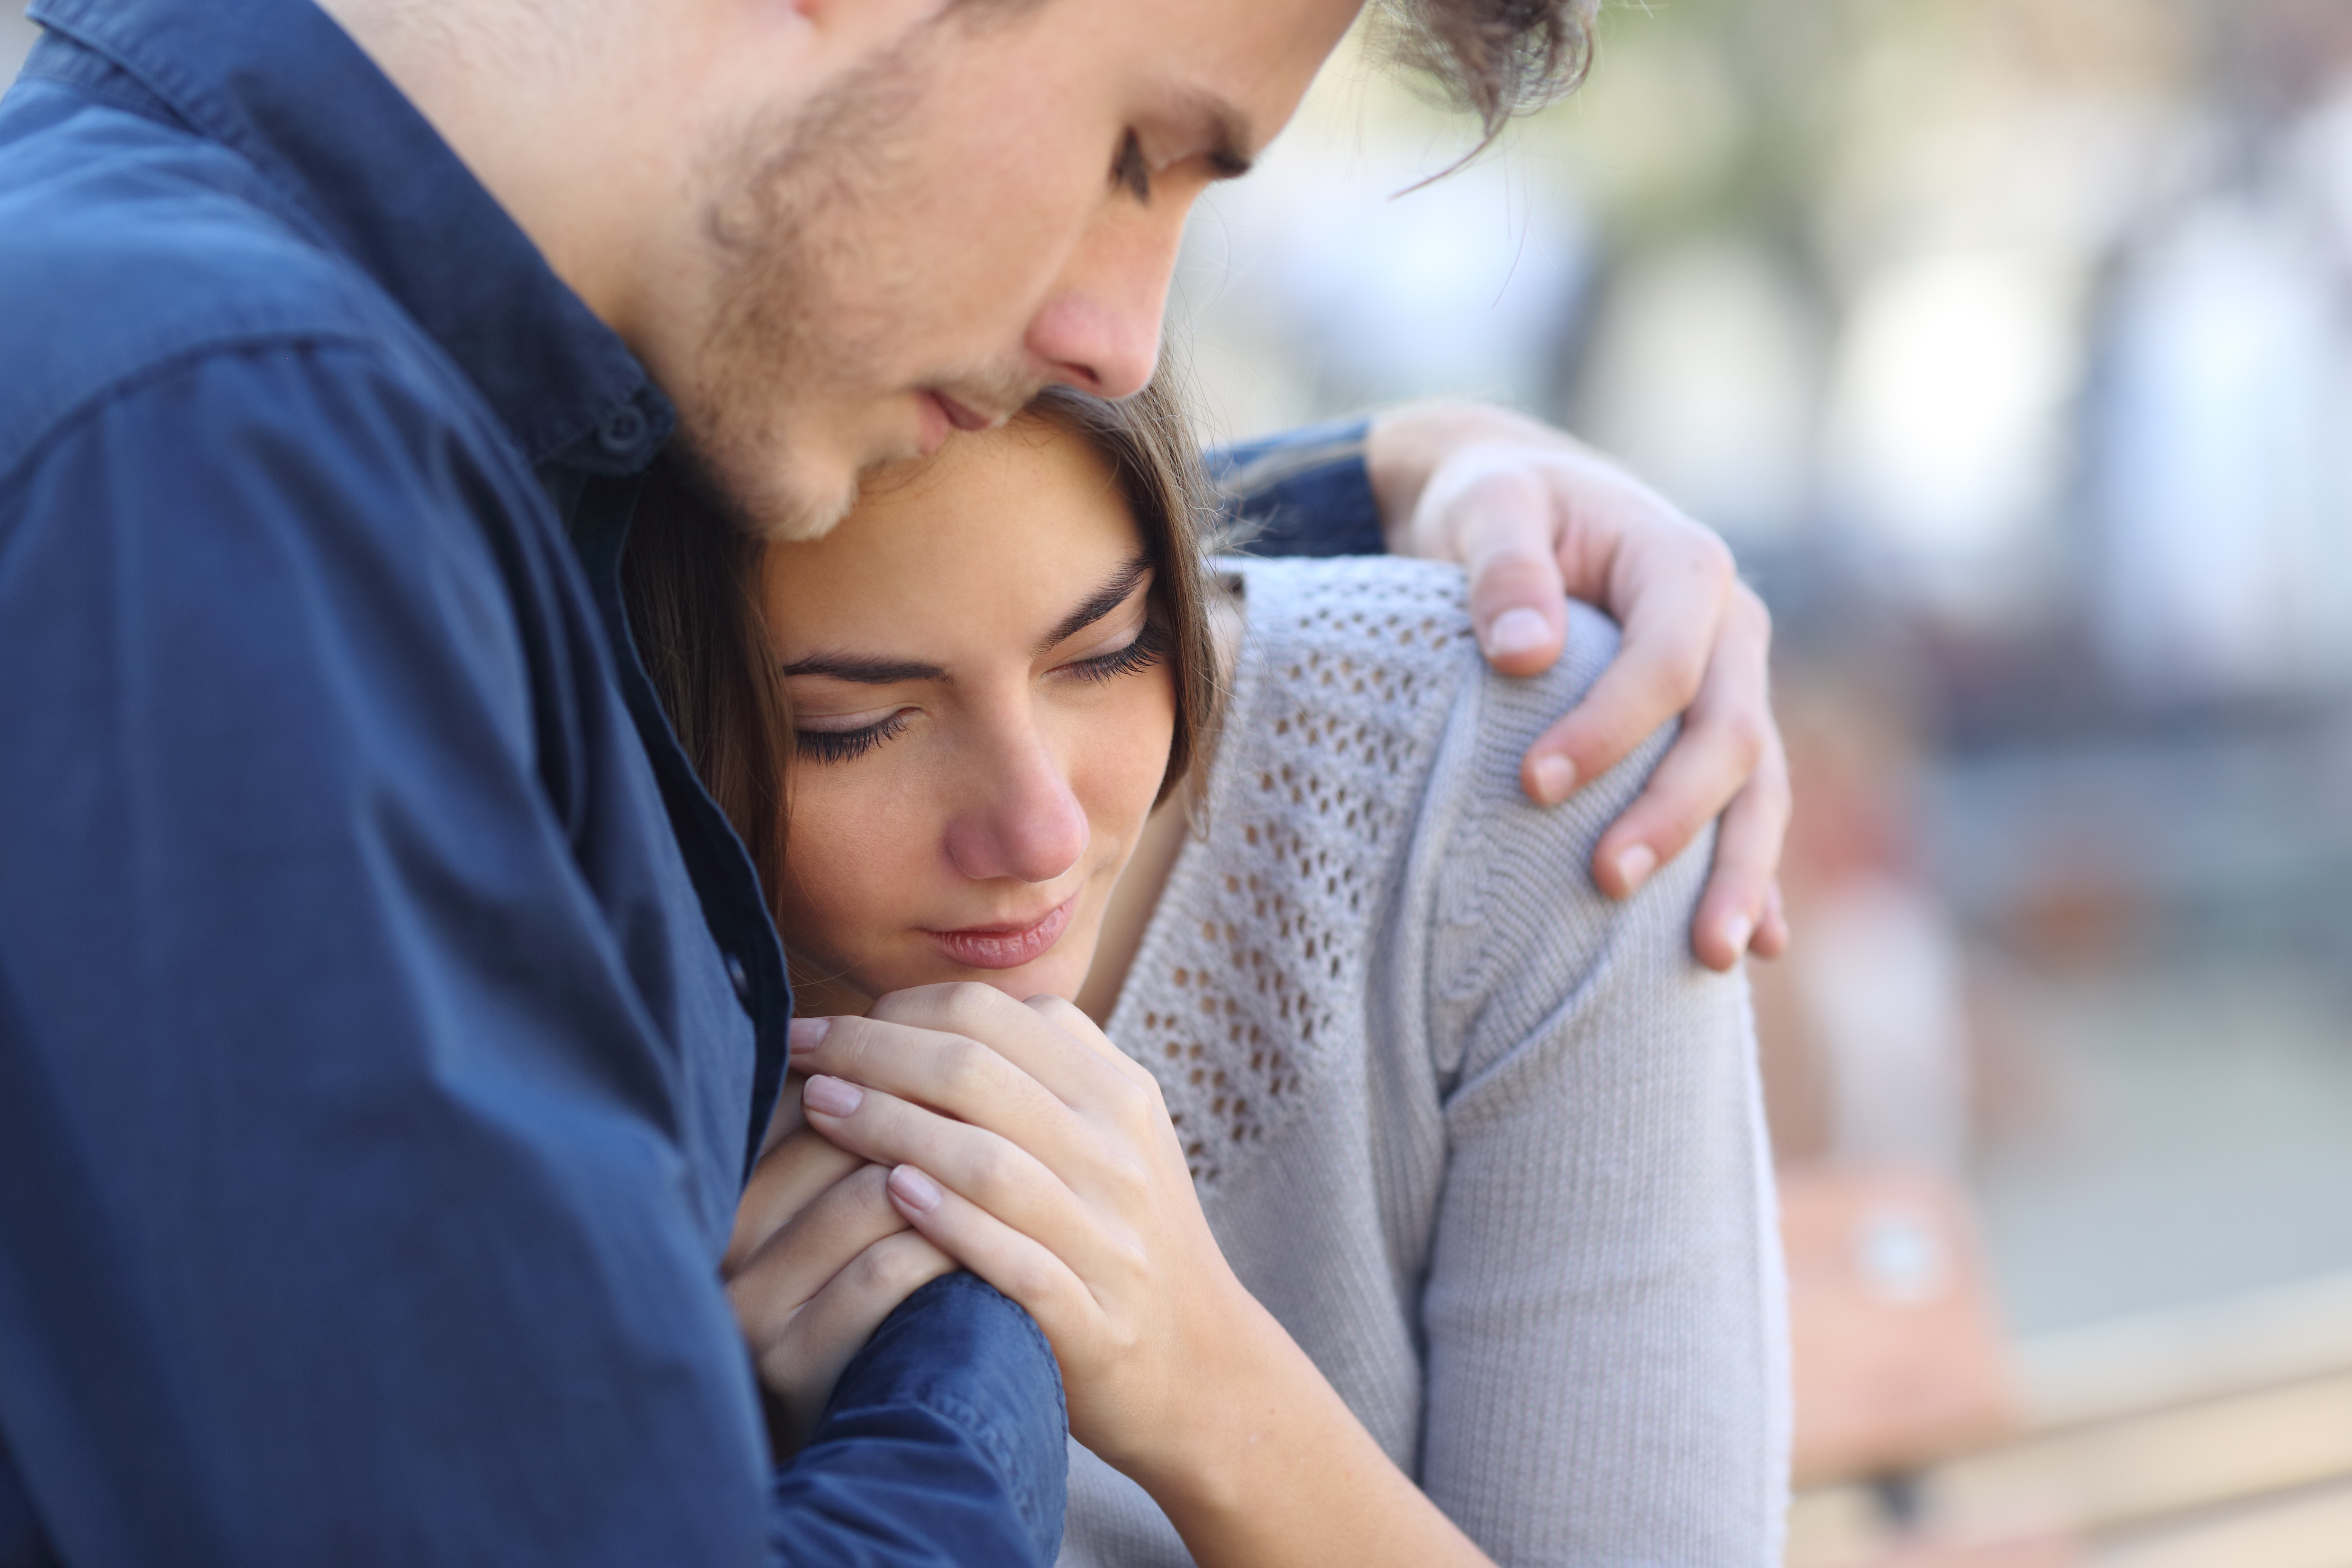 Man hugs his sad girlfriend | Source: Shutterstock.com